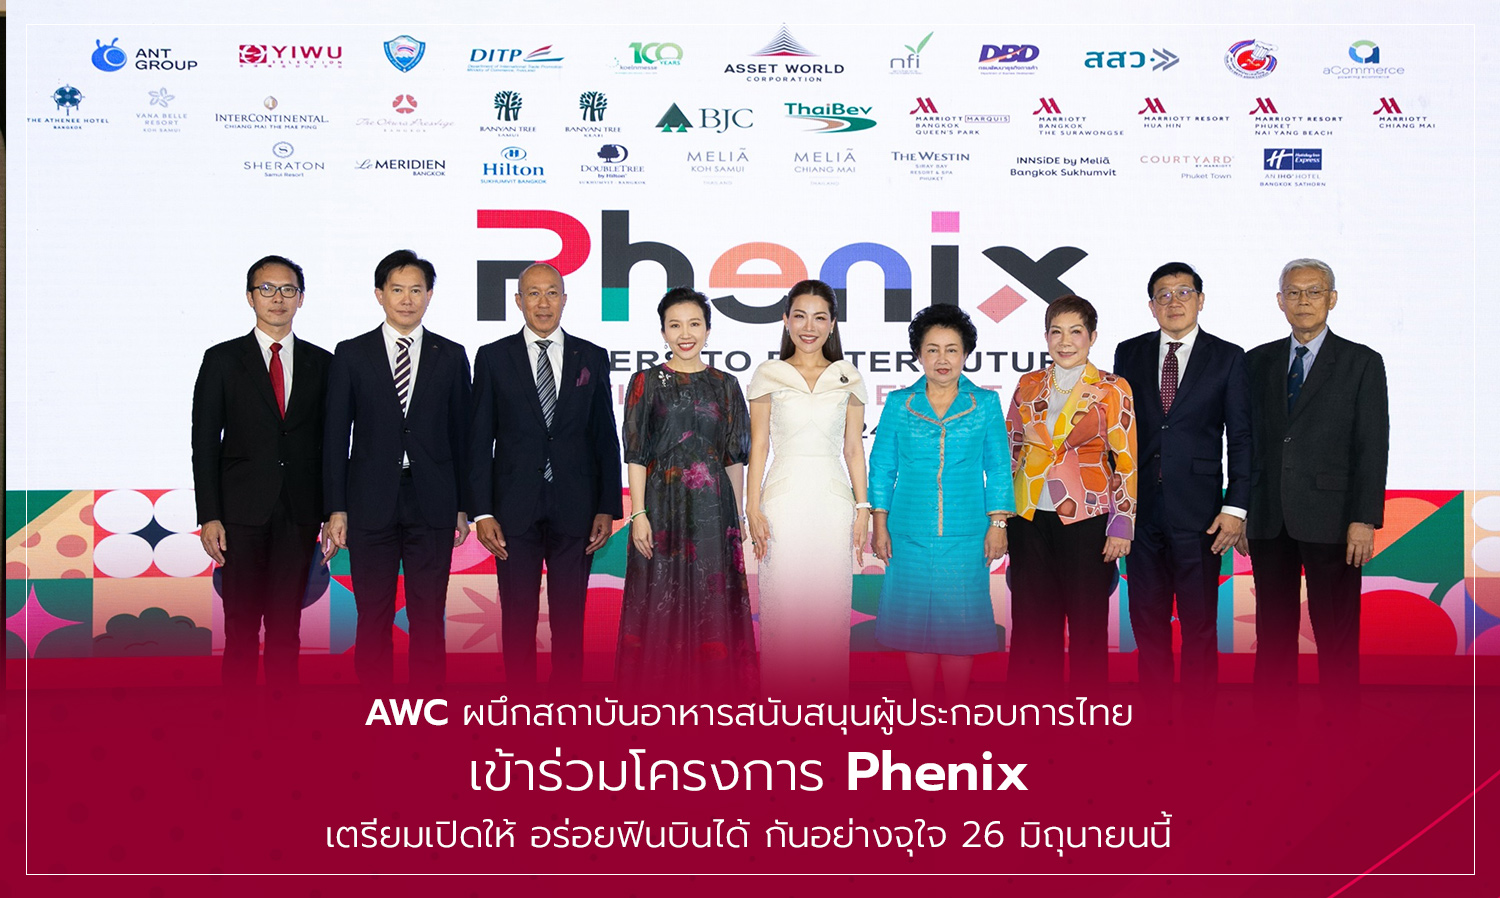 AWC ผนึกสถาบันอาหารสนับสนุนผู้ประกอบการไทยเข้าร่วมโครงการ Phenix เตรียมเปิดให้ อร่อยฟินบินได้ กันอย่างจุใจ 26 มิถุนายนนี้